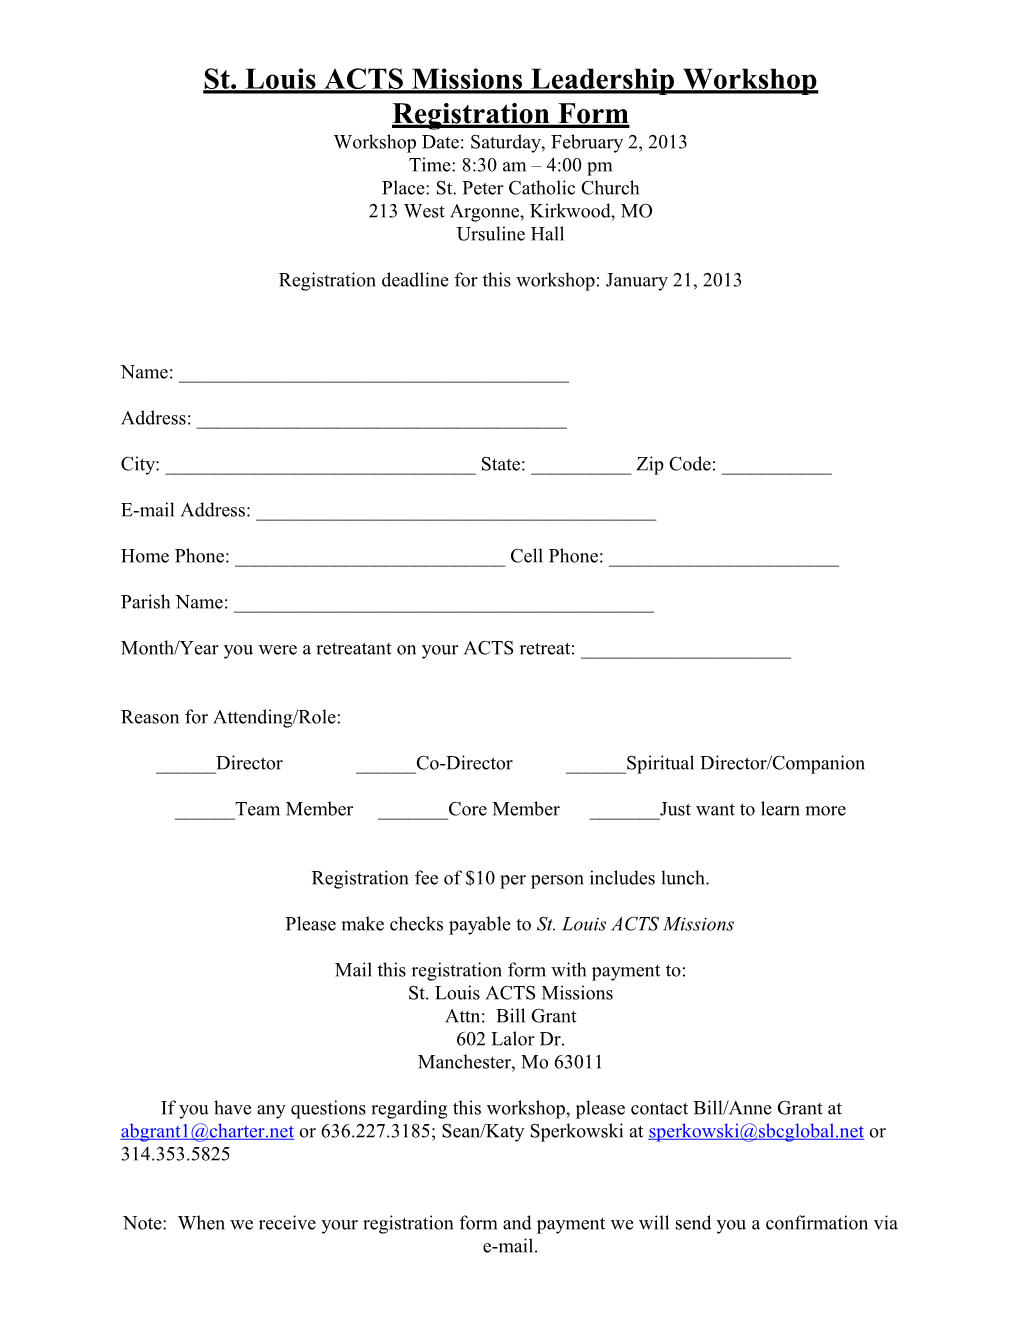 St. Louis ACTS Missions Leadership Workshop Registration Form